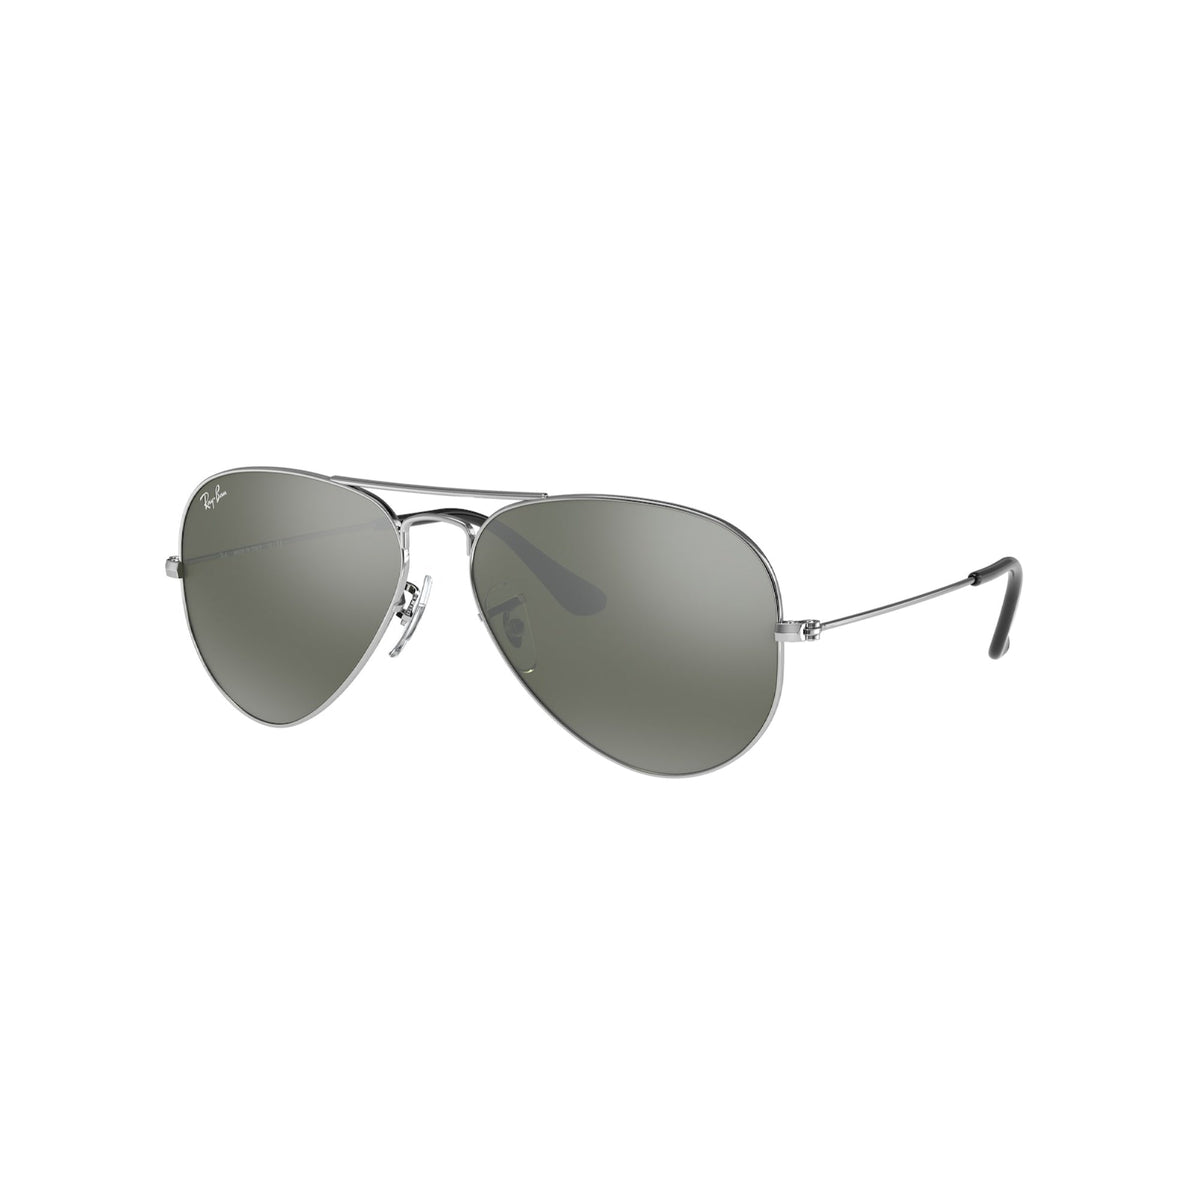 Ray-Ban Unisex Sunglasses Aviator large Metal Silver Grey Mirror Metal Metal  0RB3025 W3275 55